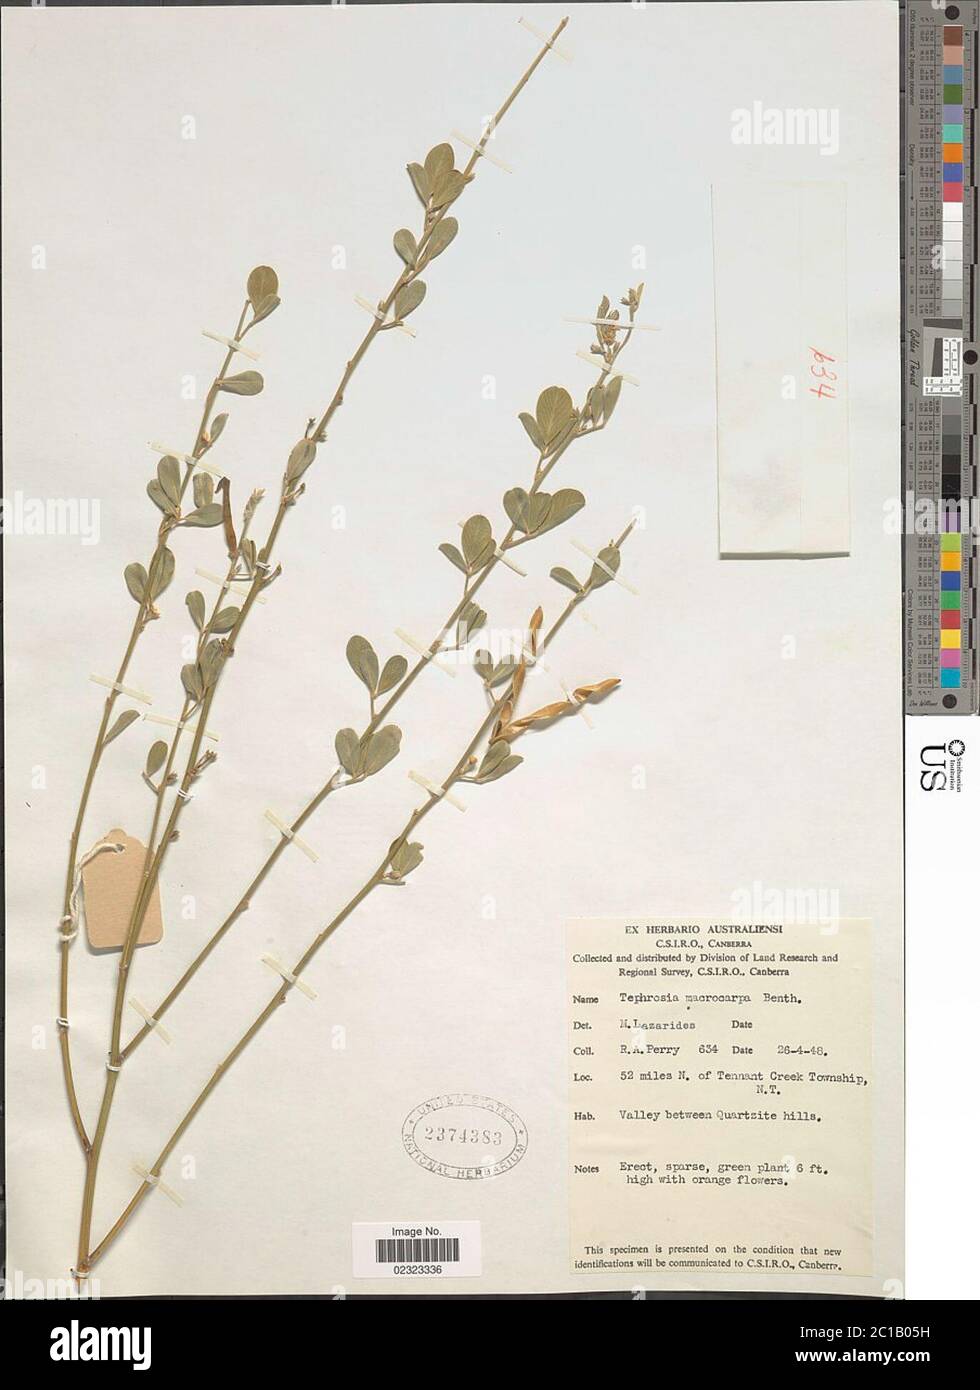 Tephrosia macrocarpa Benth Tephrosia macrocarpa Benth. Stock Photo